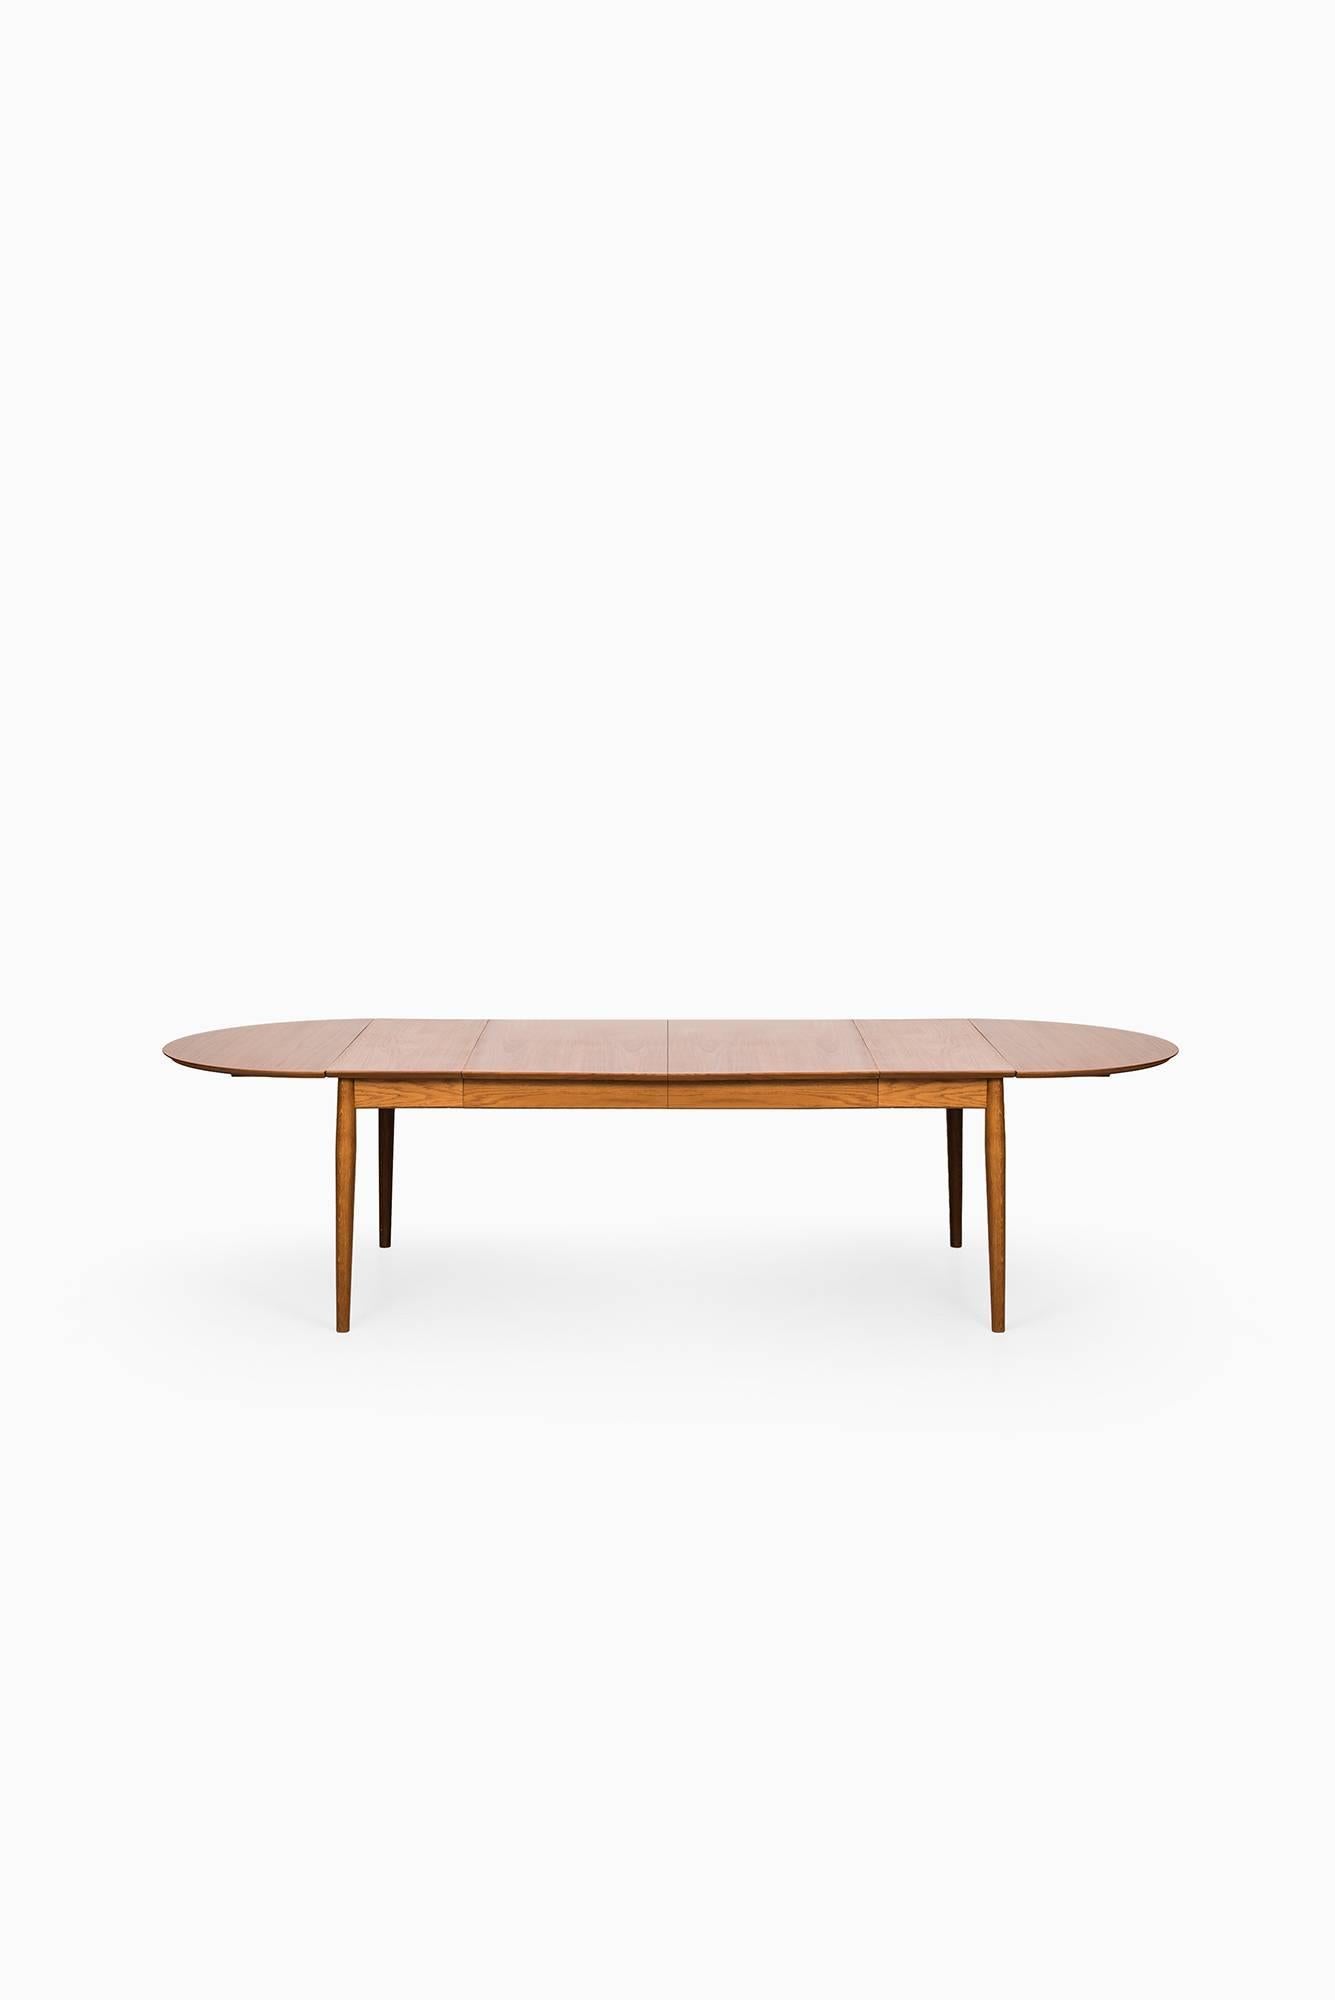 Rare dining table model 227 designed by Arne Vodder. Produced by Sibast in Denmark.